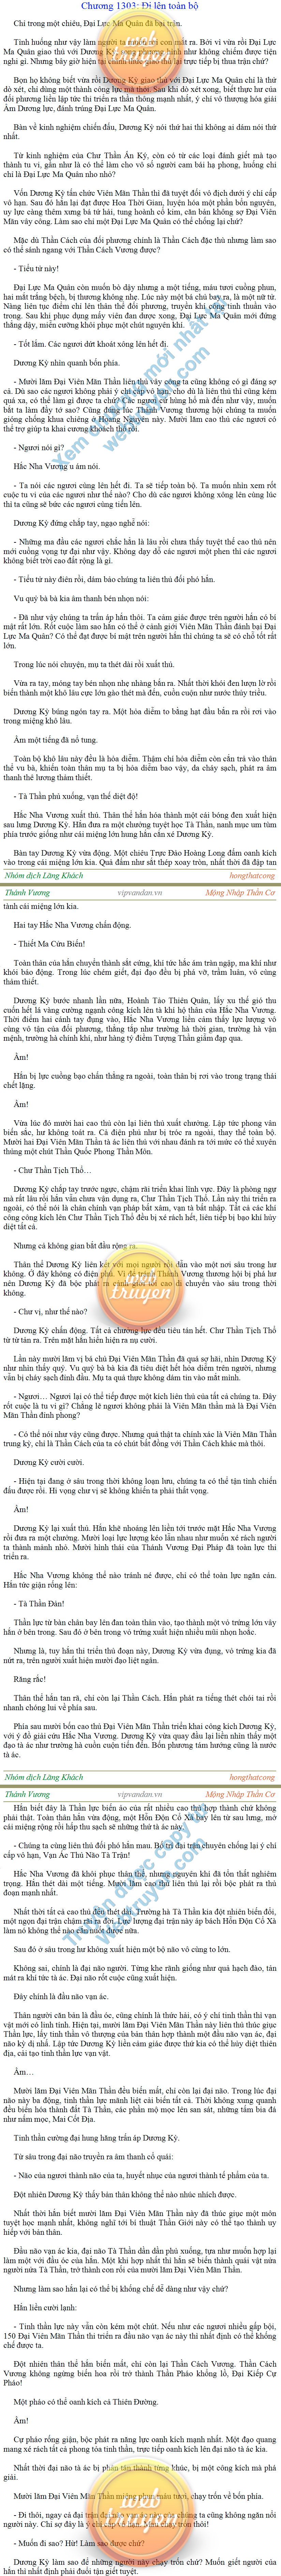 Thanh-vuong-1303.png